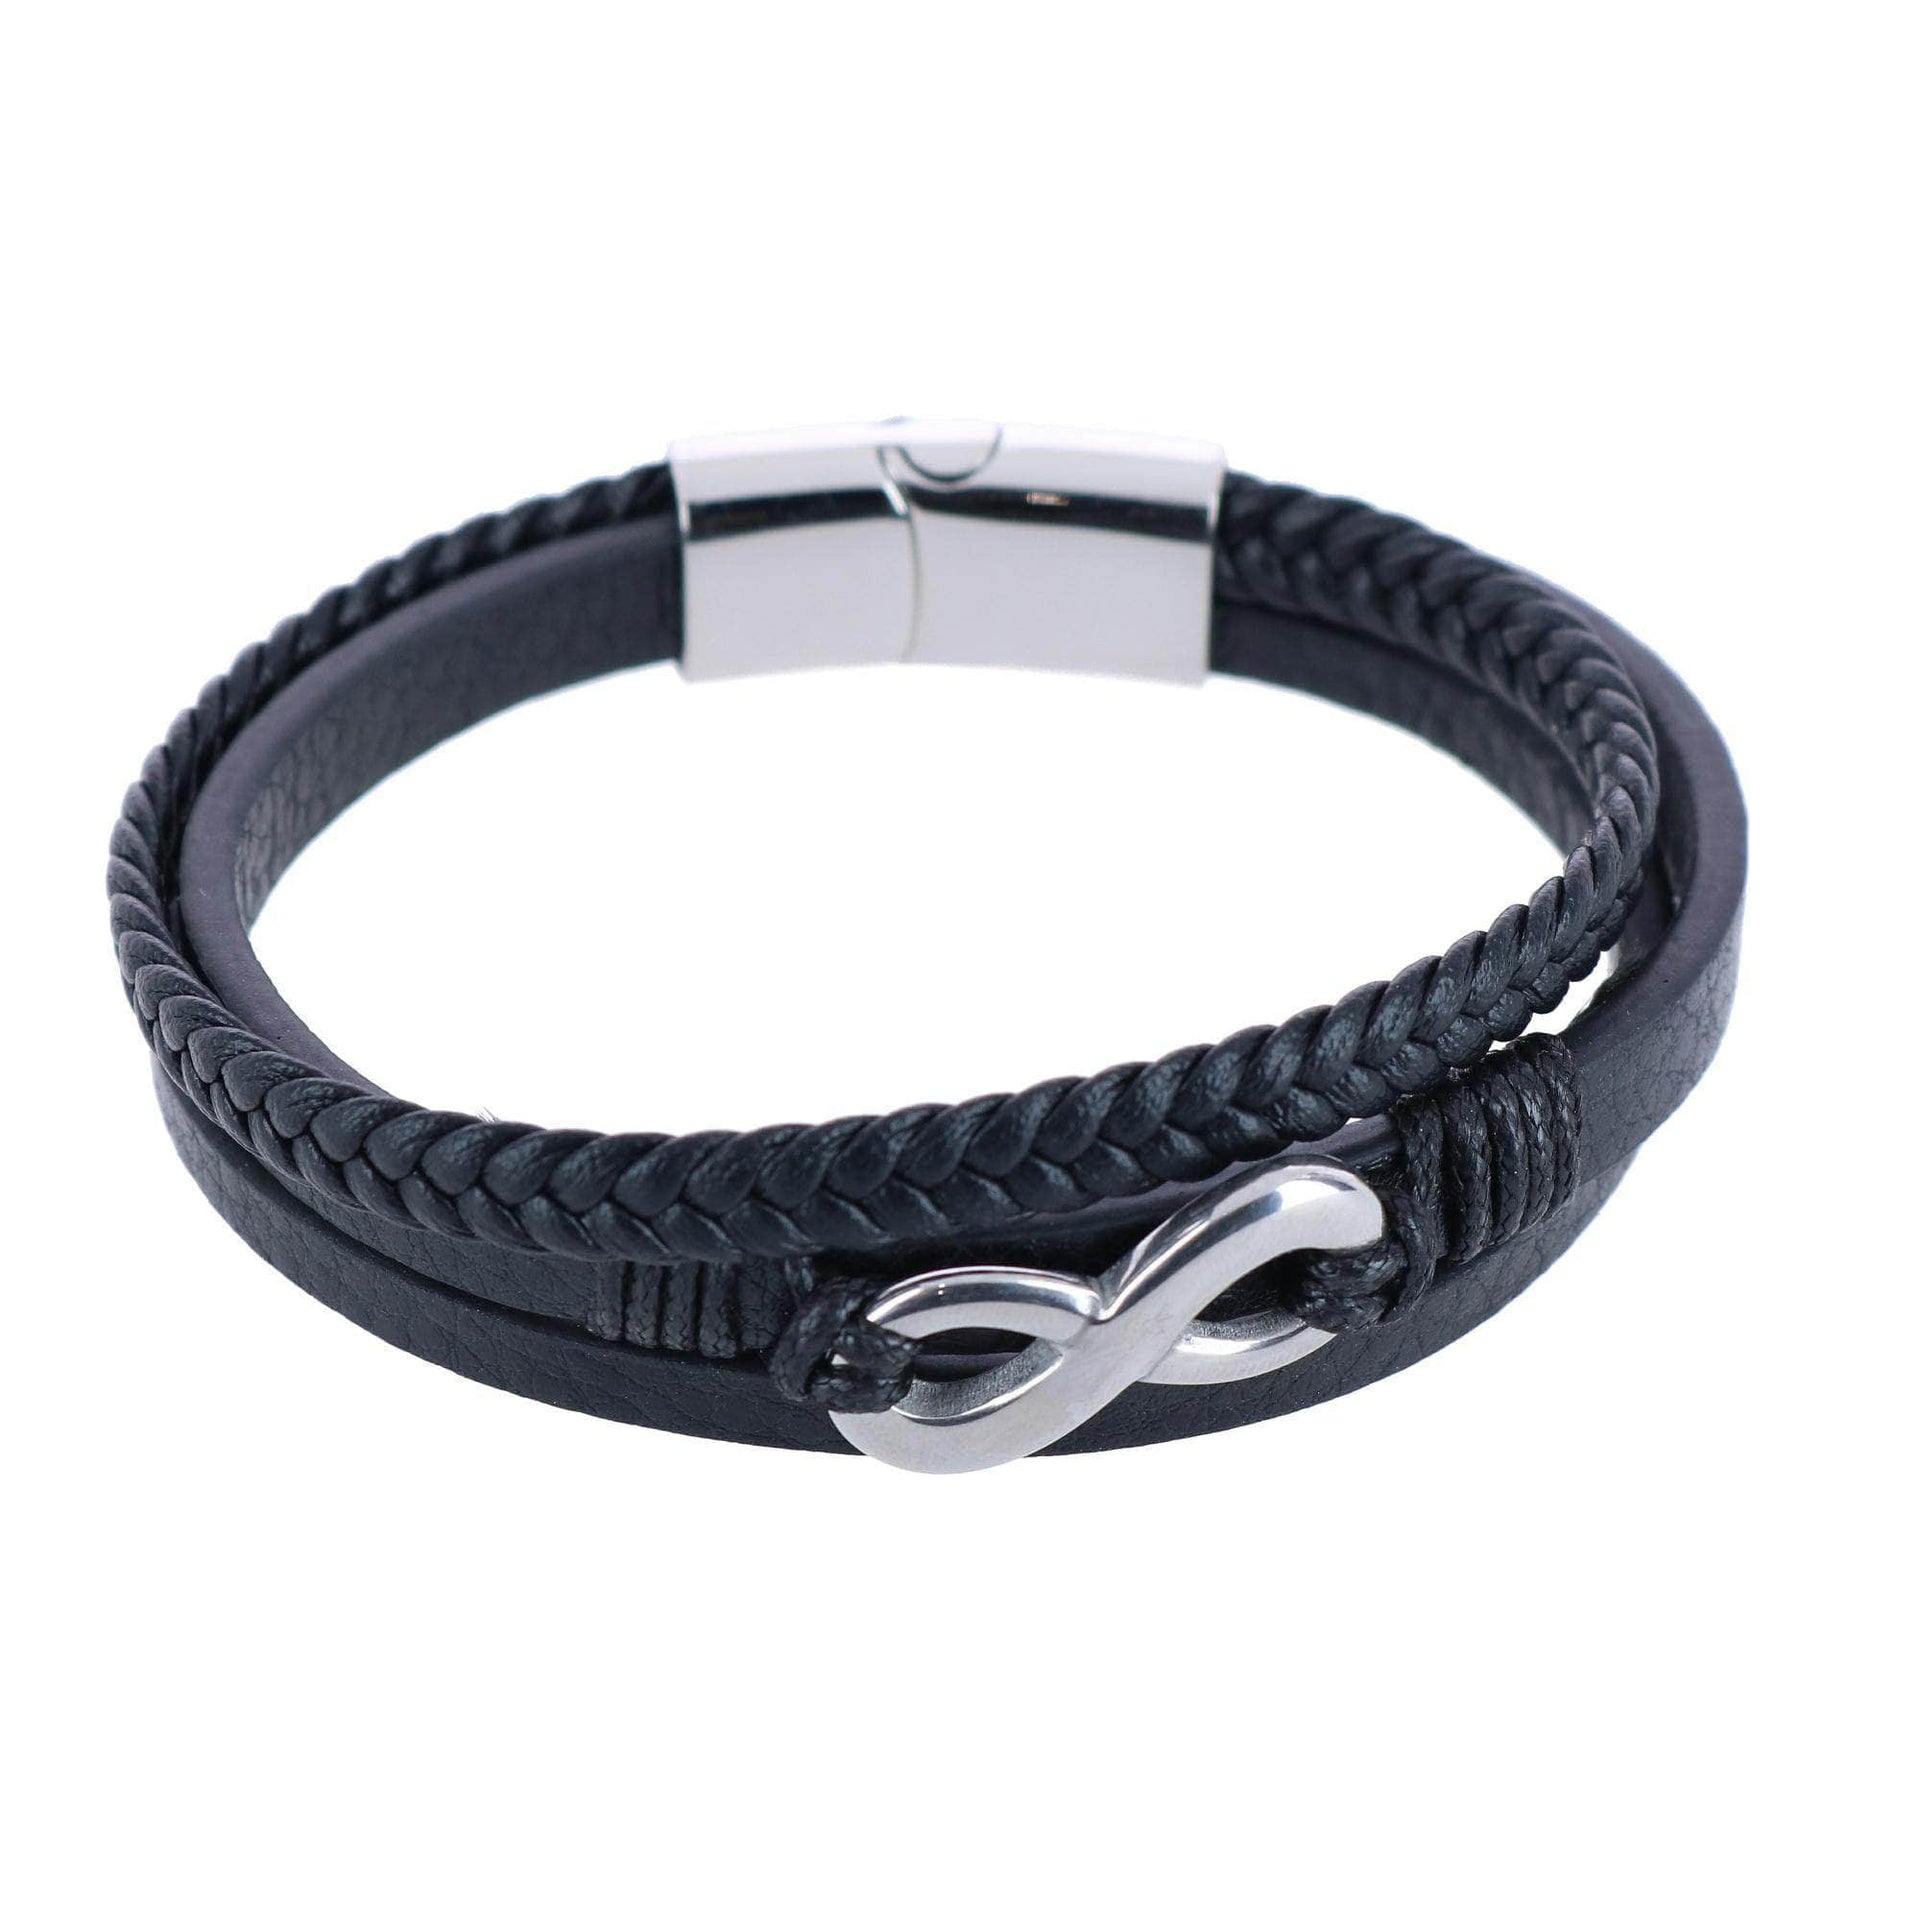 Clasp Leather Bracelet Black - Black